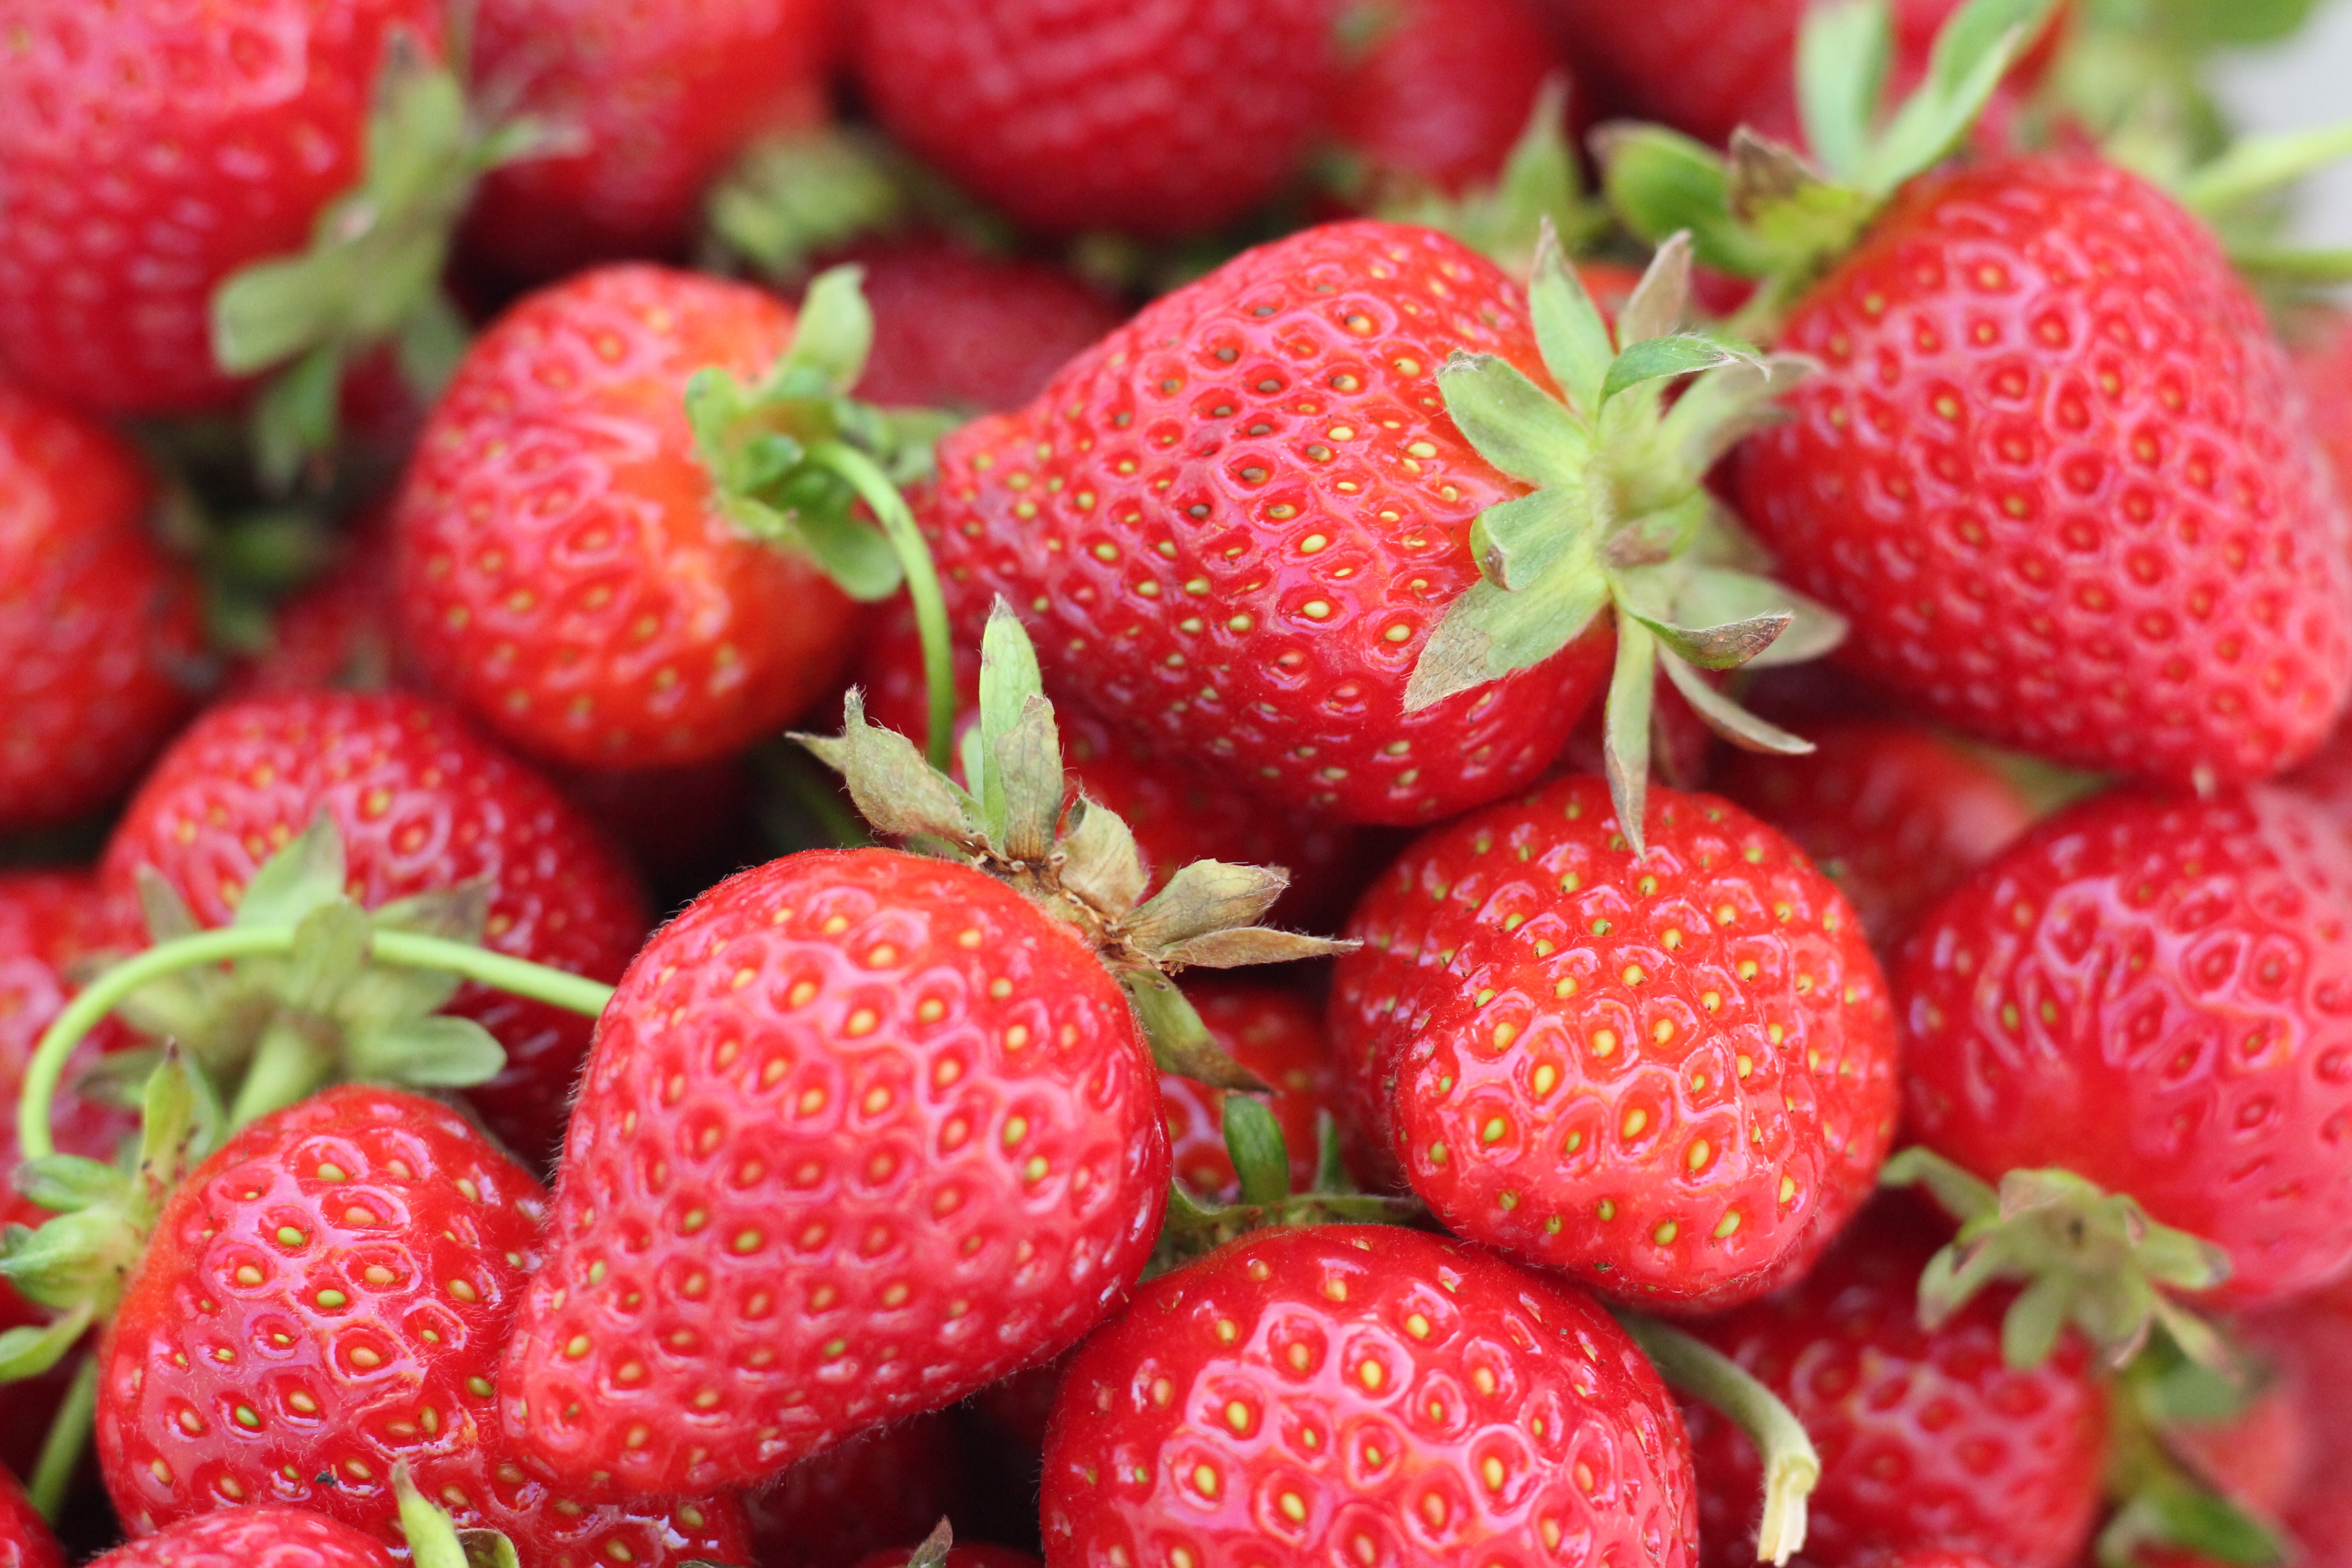 Strawberries up close